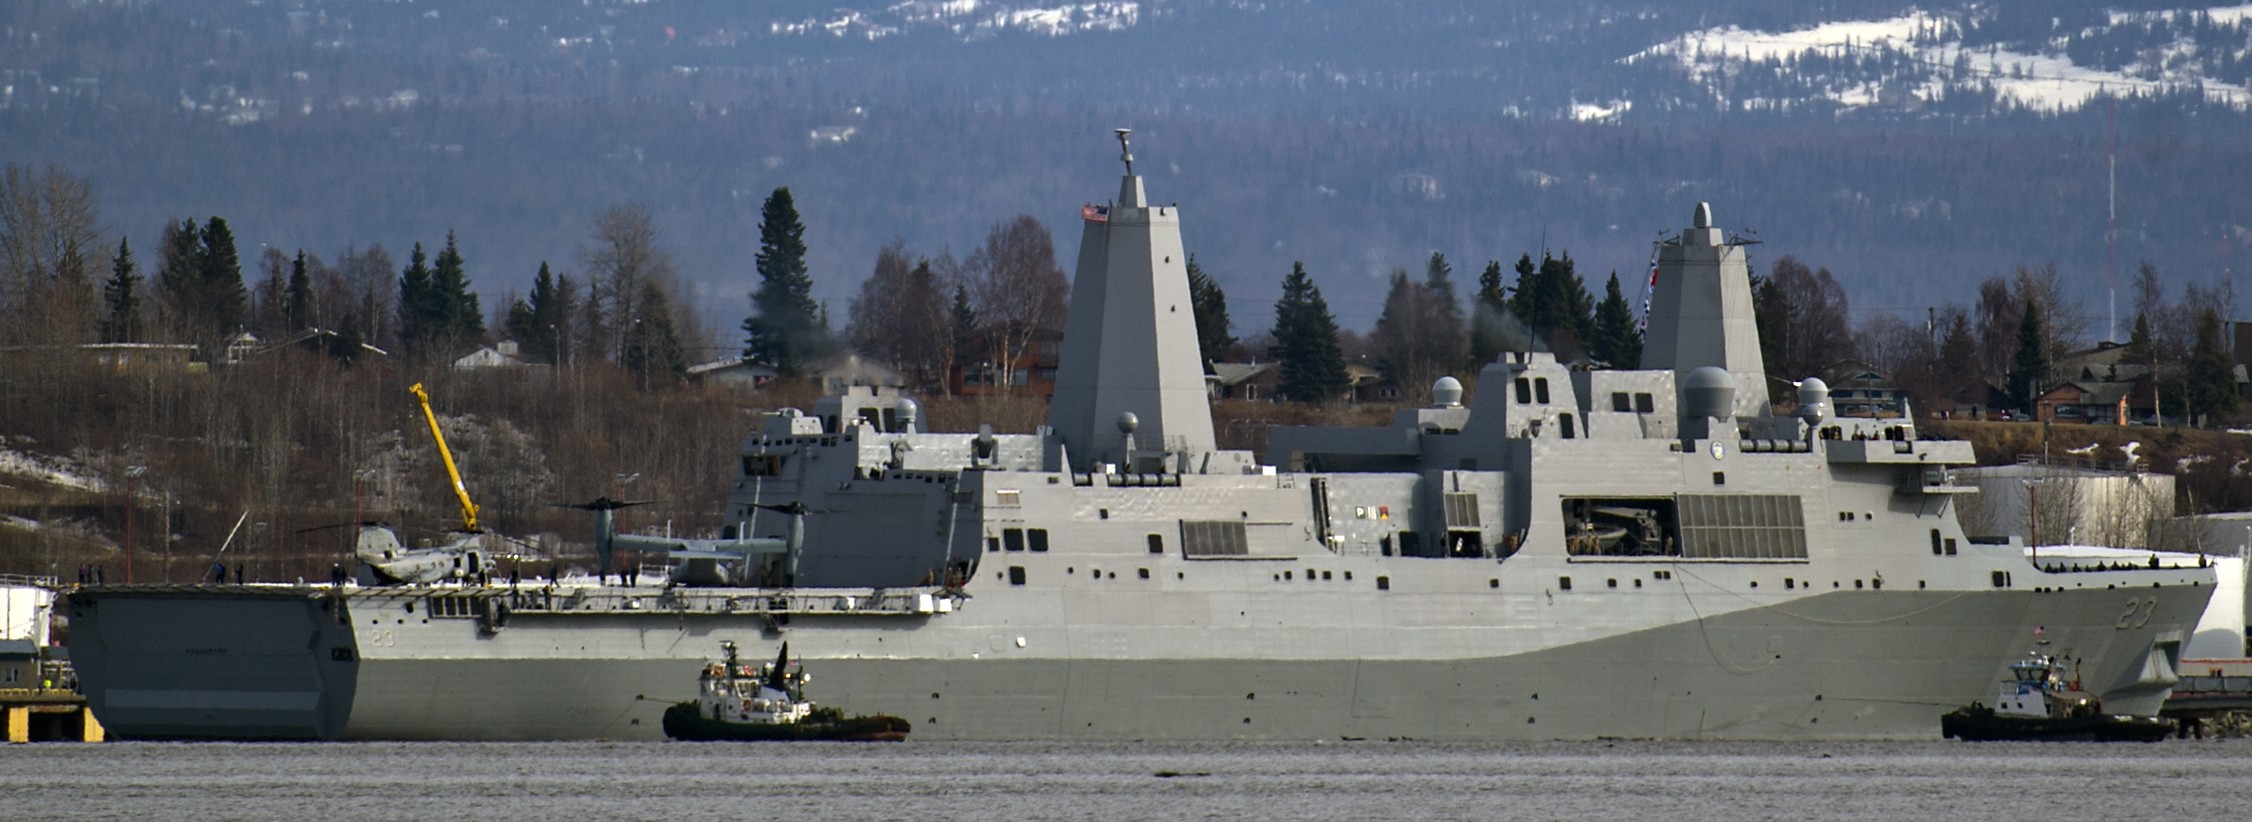 lpd-23 uss anchorage san antonio class amphibious transport dock ship navy 78 alaska